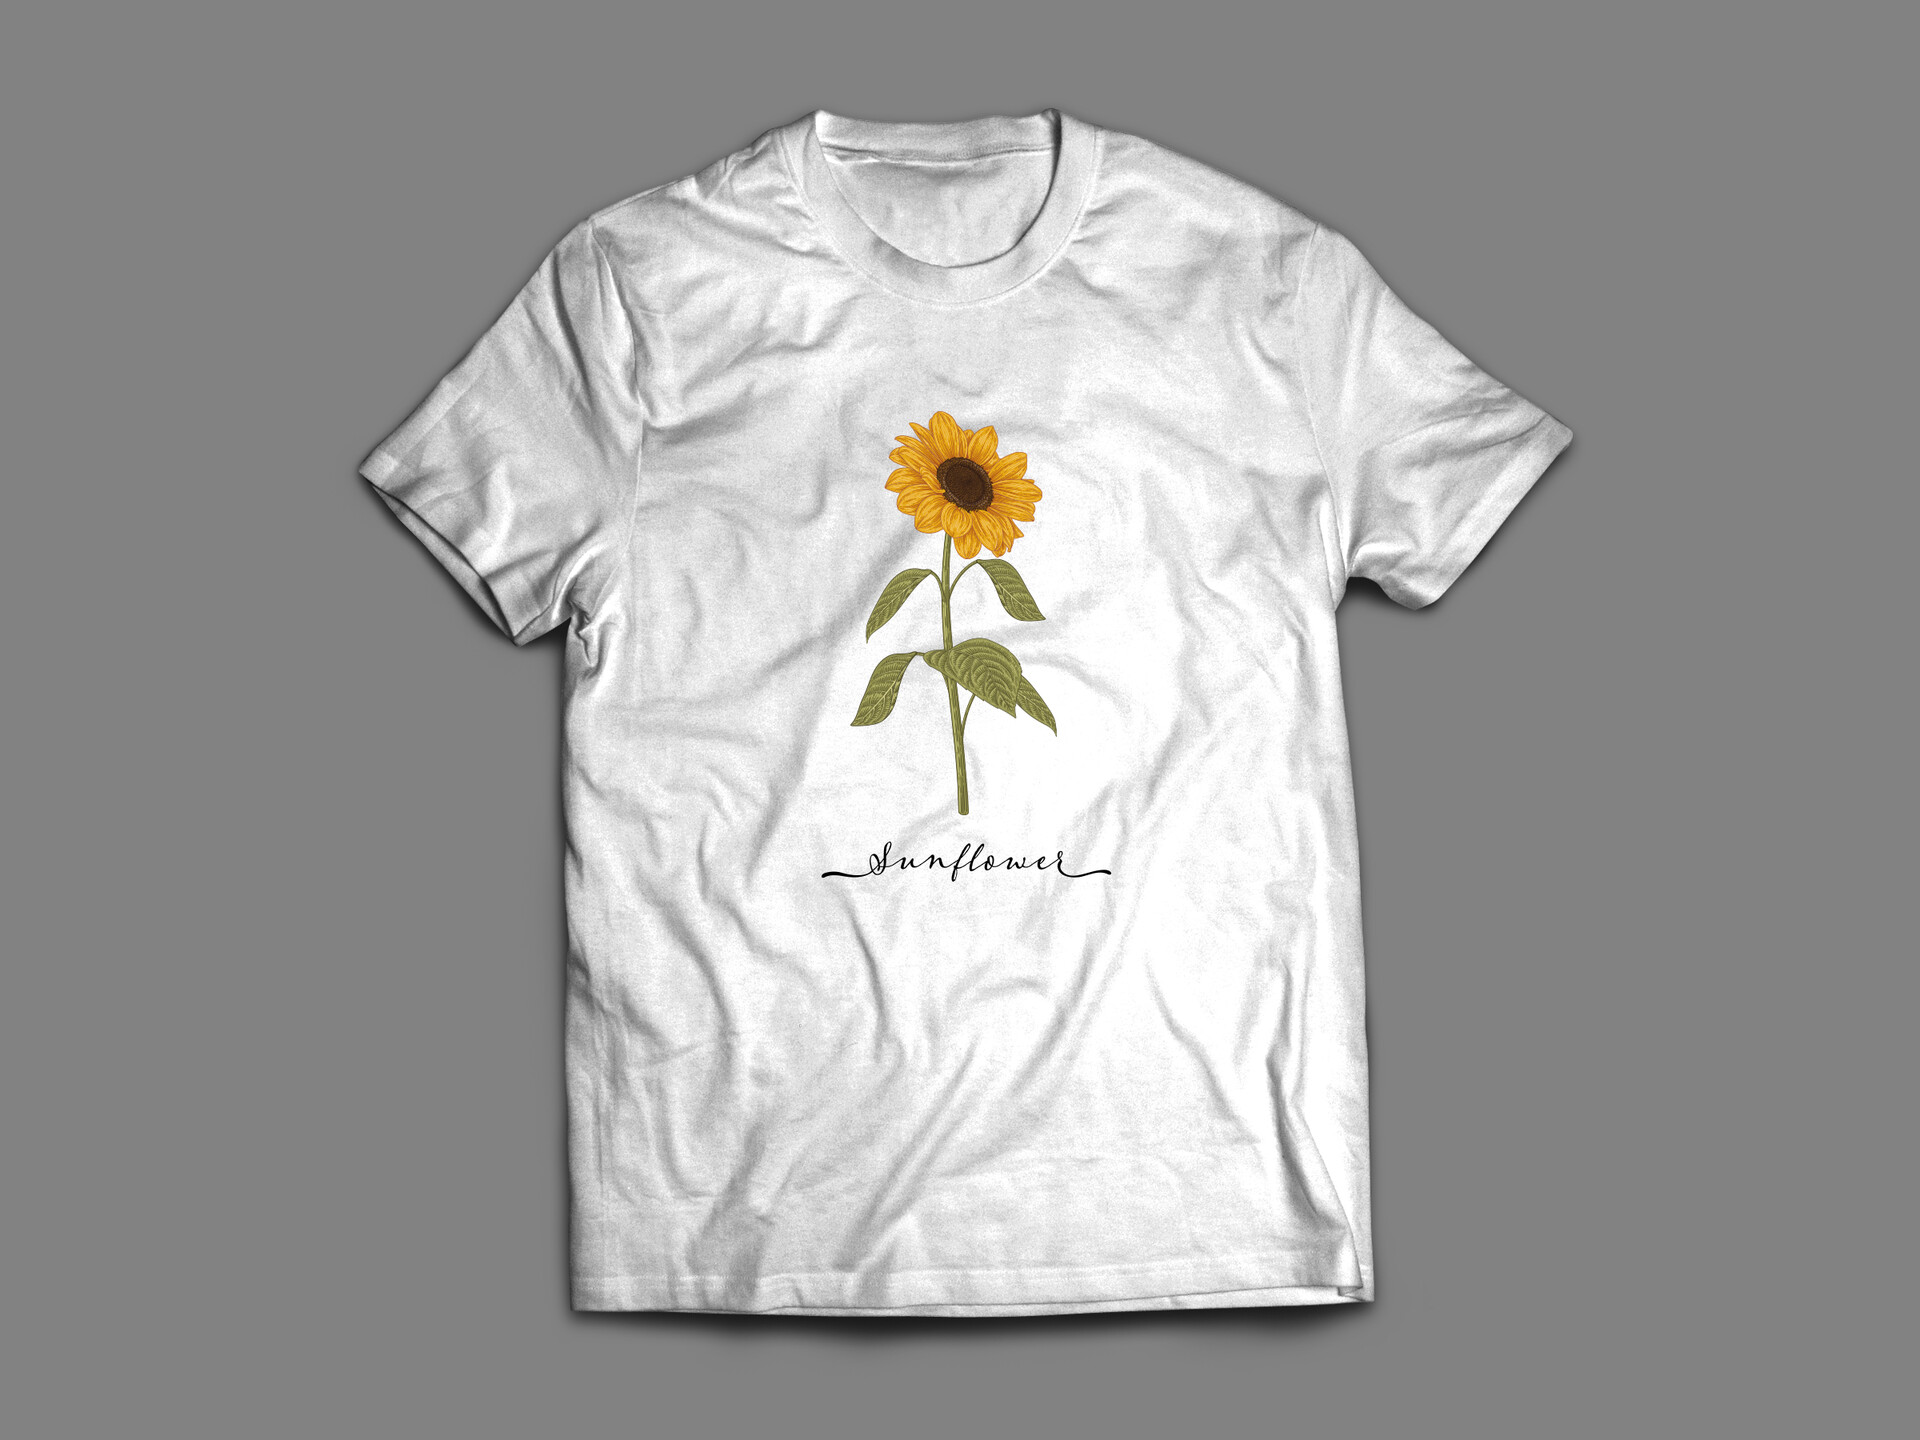 ArtStation - Tshirt Sunflower